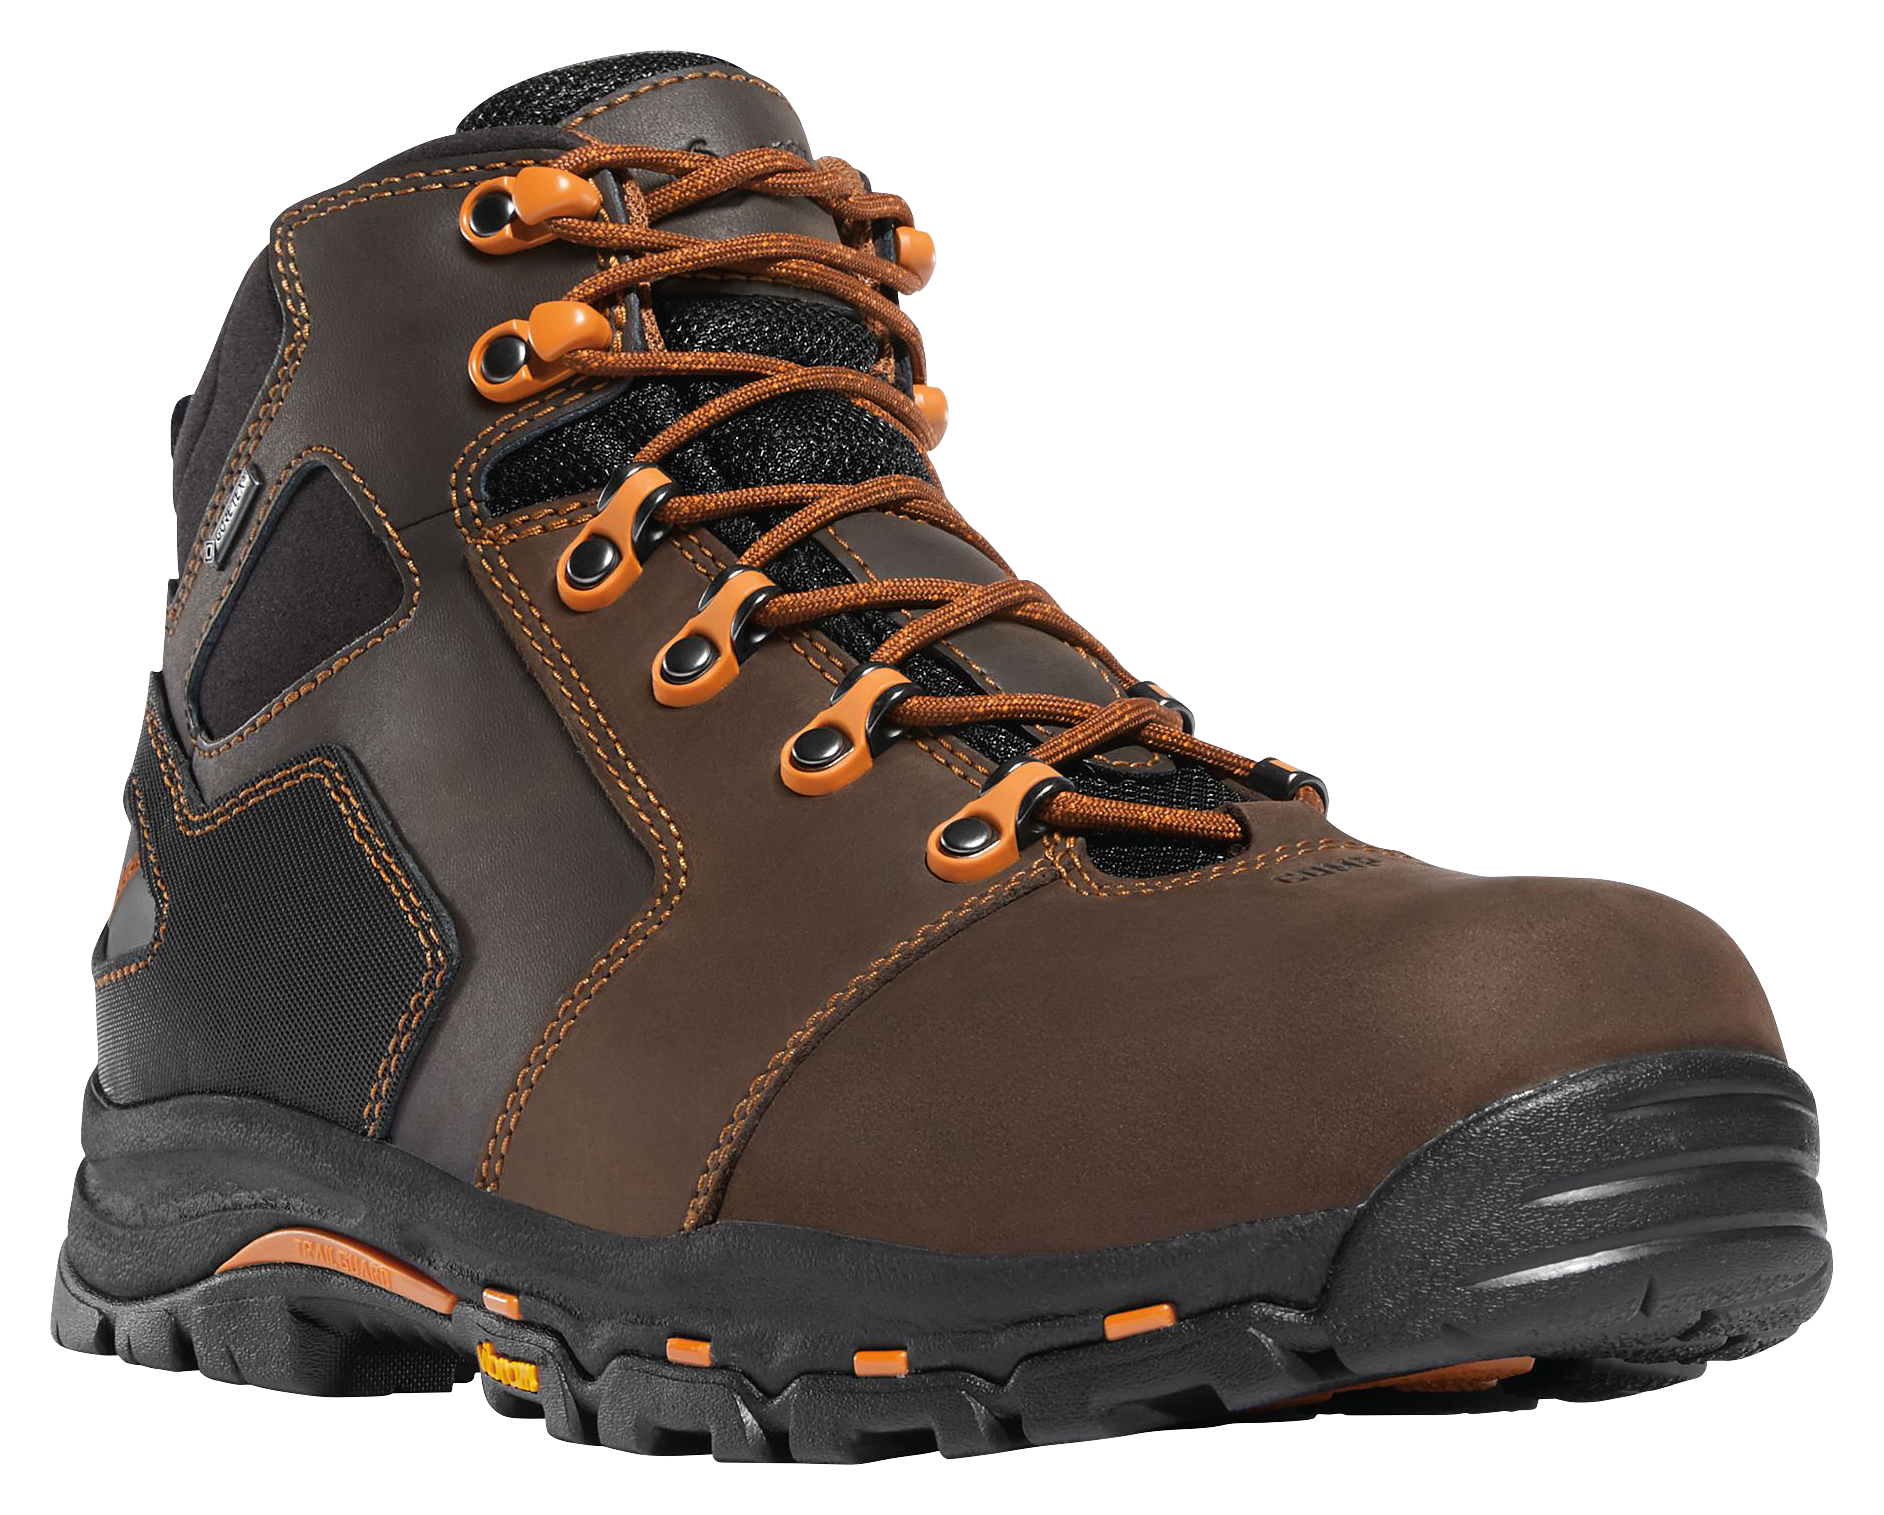 Danner Vicious 4.5'' GORE-TEX EH Work Boots for Men - Brown/Orange - 7.5M